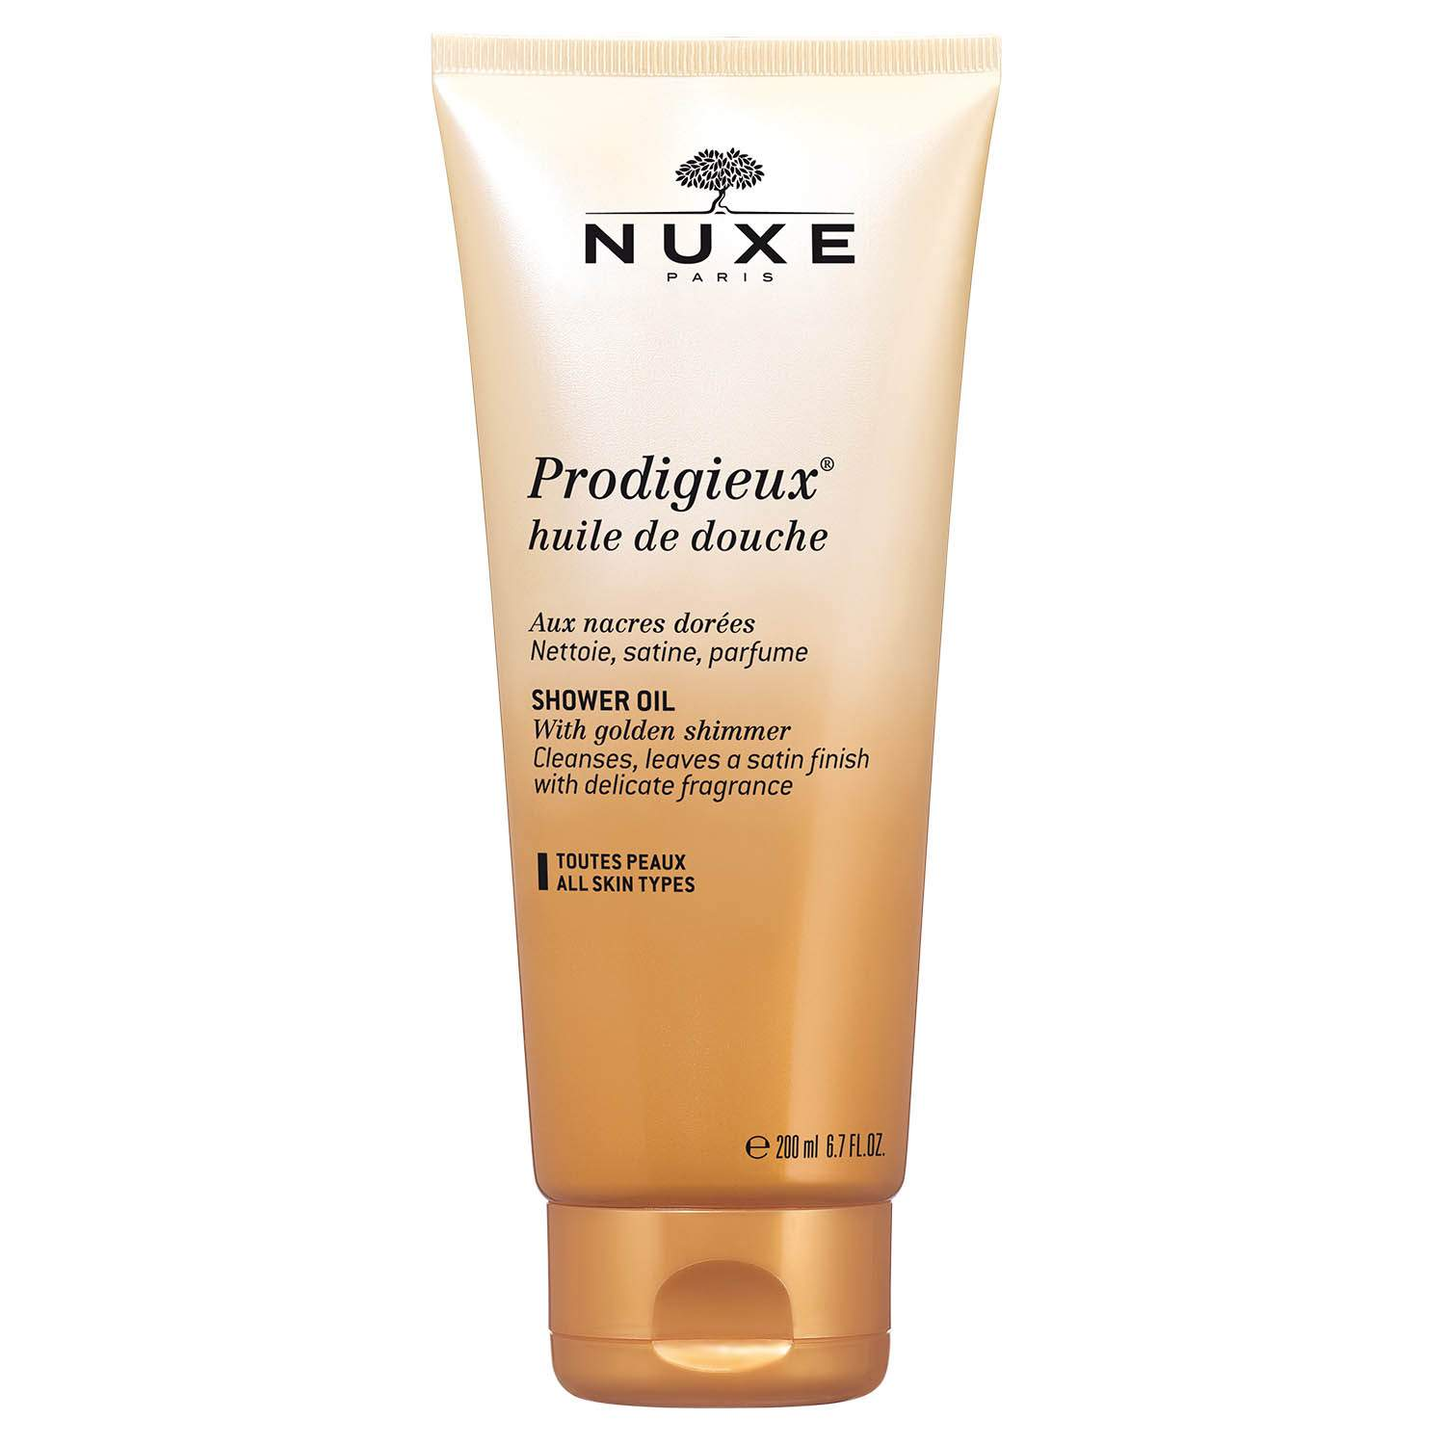 NUXE Prodigieux® Shower Oil